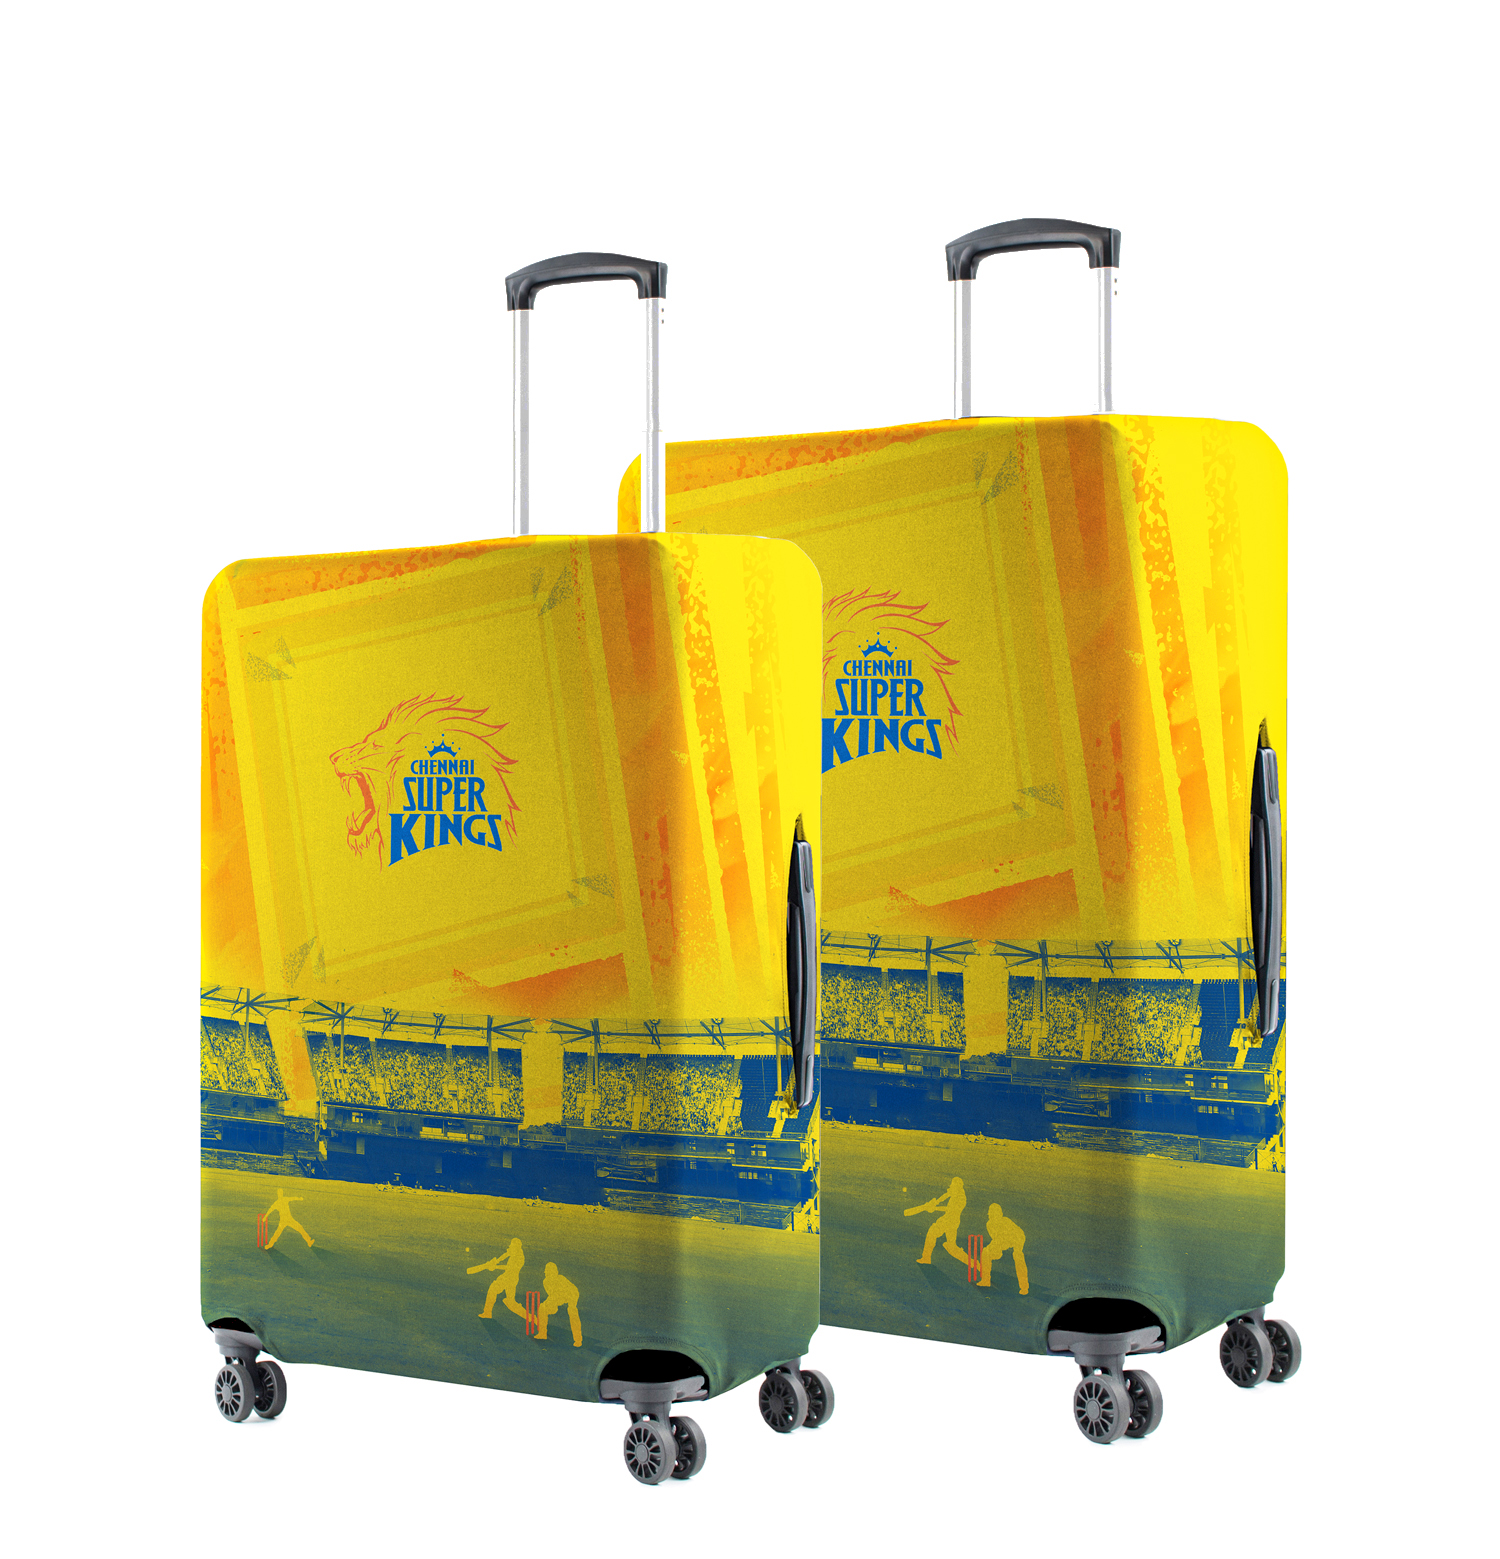 Straight Outta Chepauk CSK Luggage Cover Set